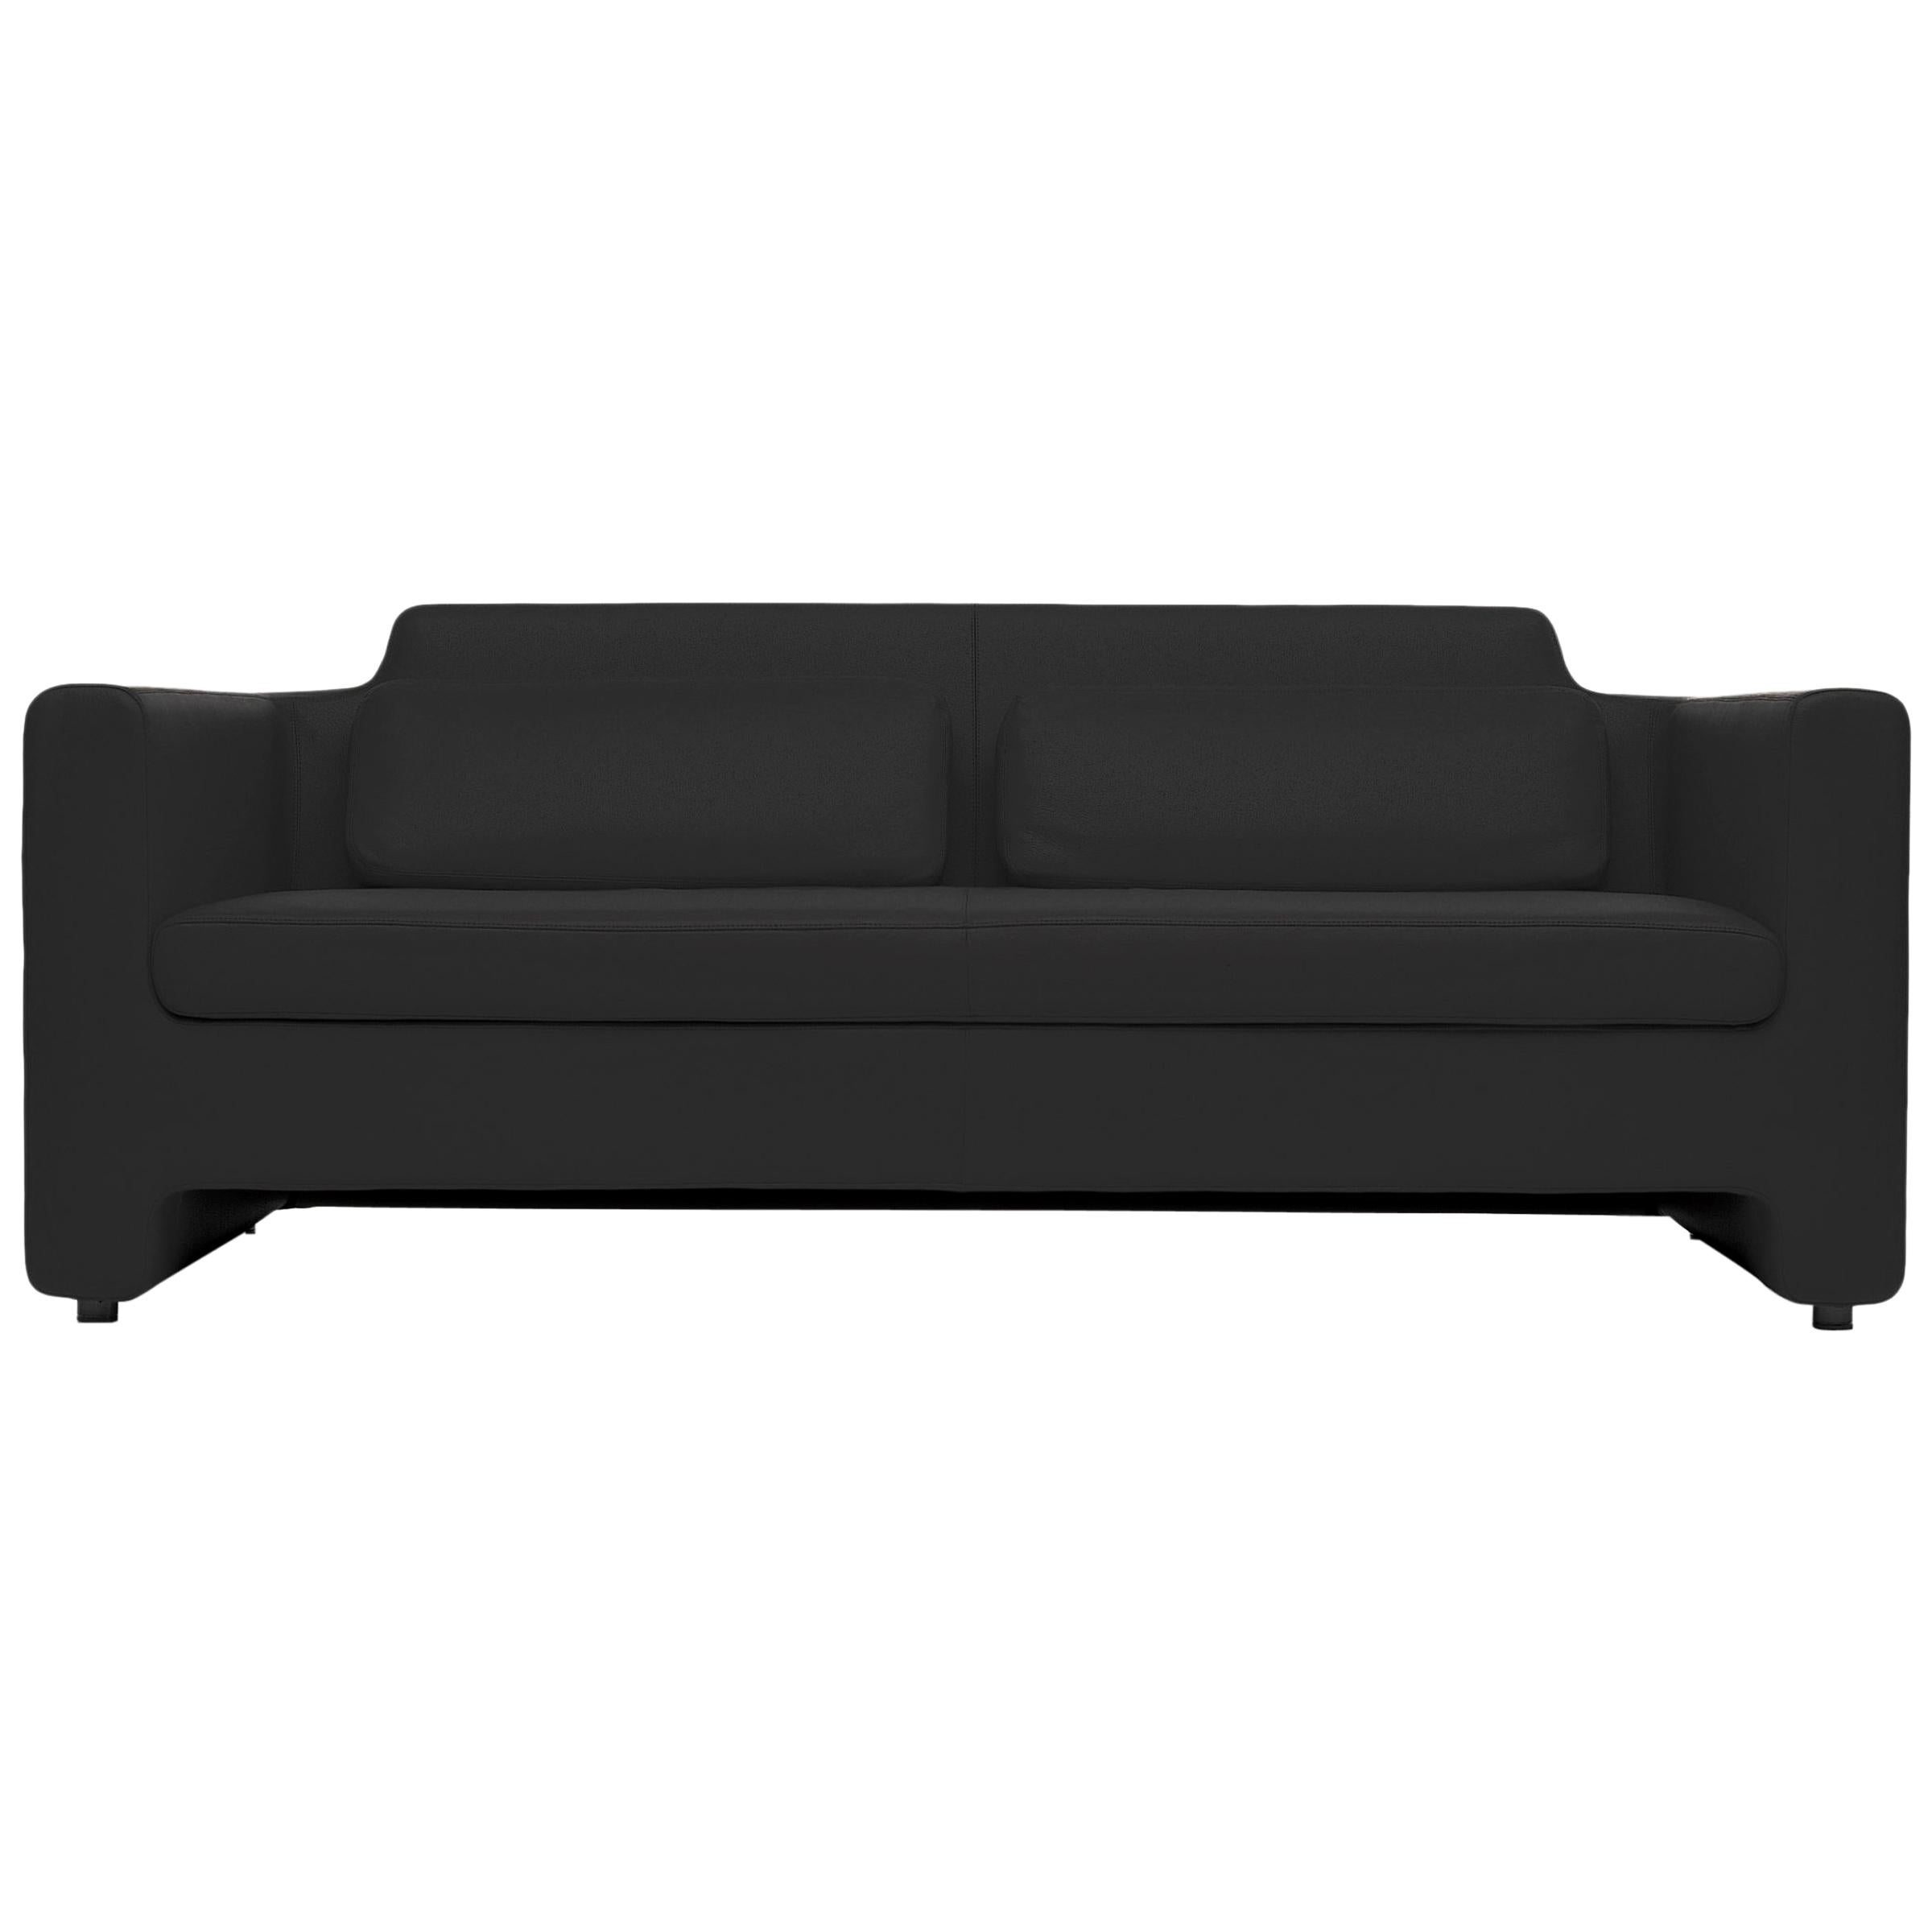 Baleri Italia Horizon Sofa in Black Leather by Arik Levy